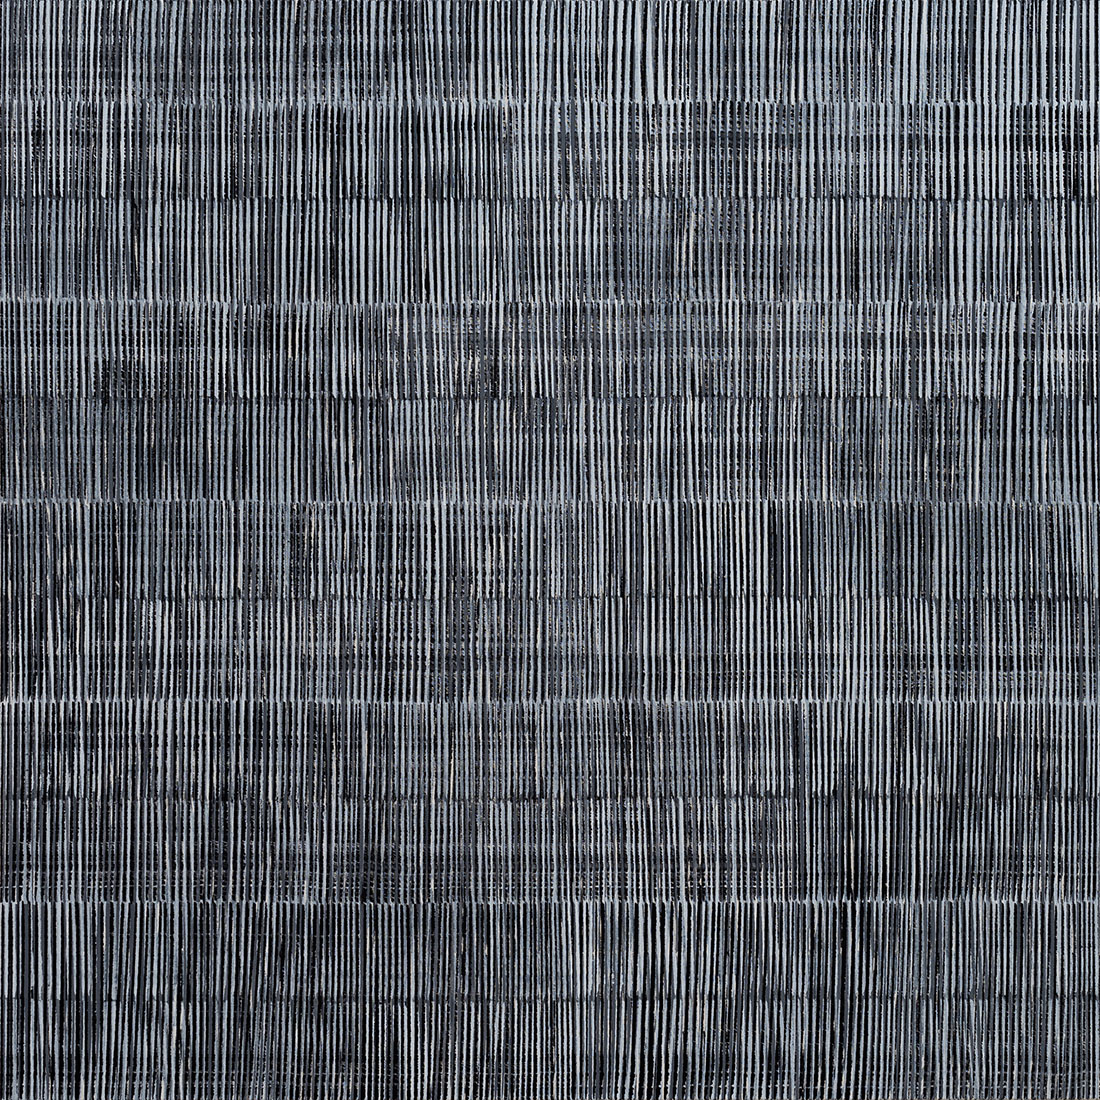 Nikola Dimitrov, NachtKlang VII, 2020, Pigmente, Bindemittel auf Leinwand, 110 x 110 cm